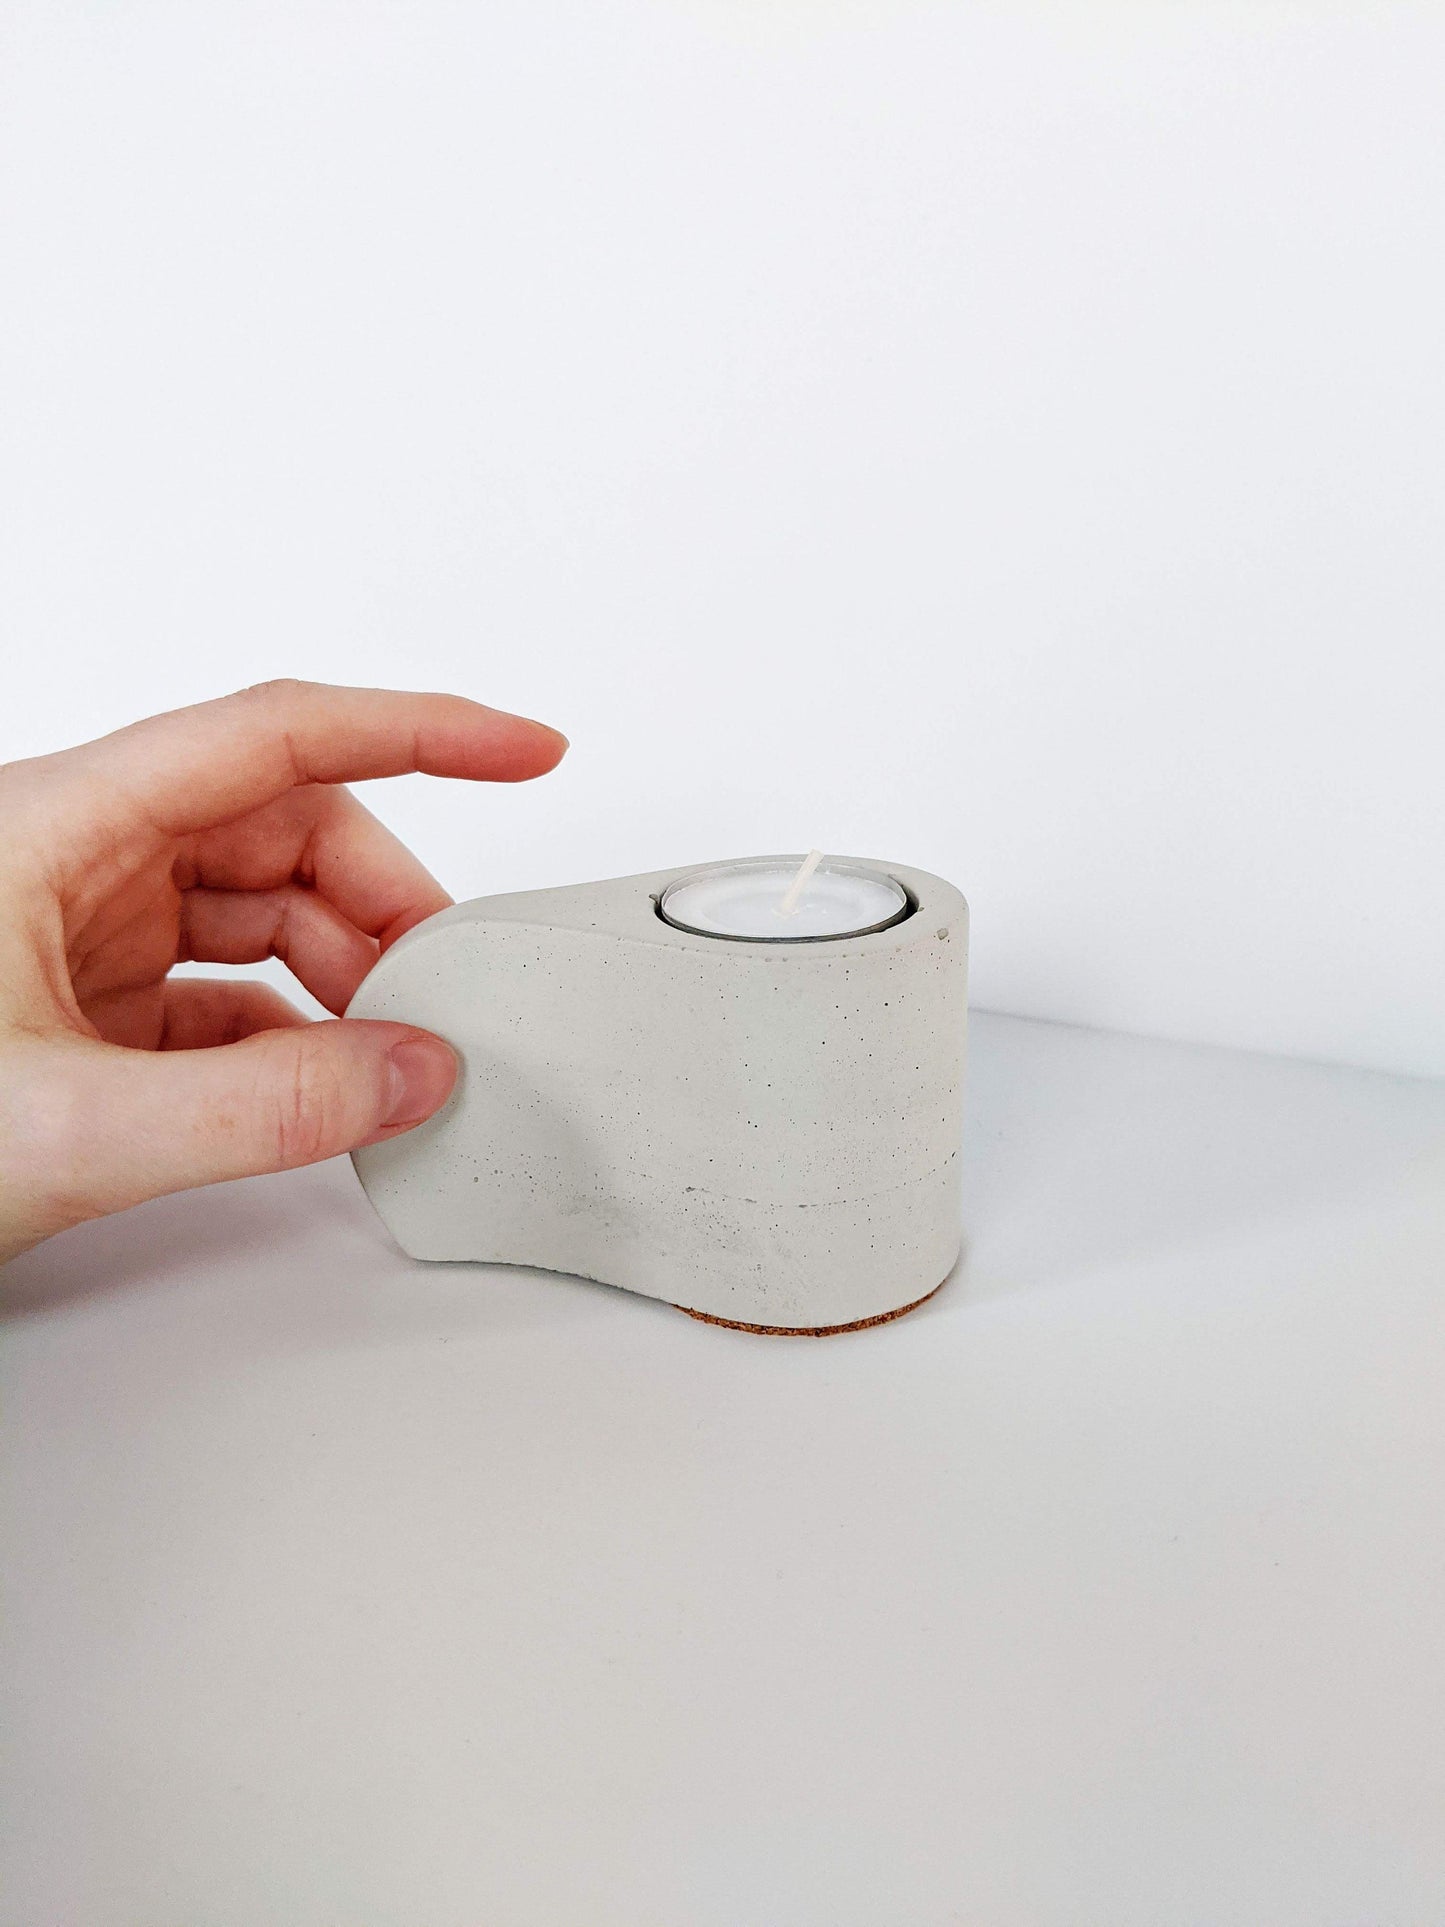 Hygge Handled Tealight Holder. Minimalist Concrete Tealight Candleholder with Handle. Modern Scandi Home Decor. Gifts under 30.